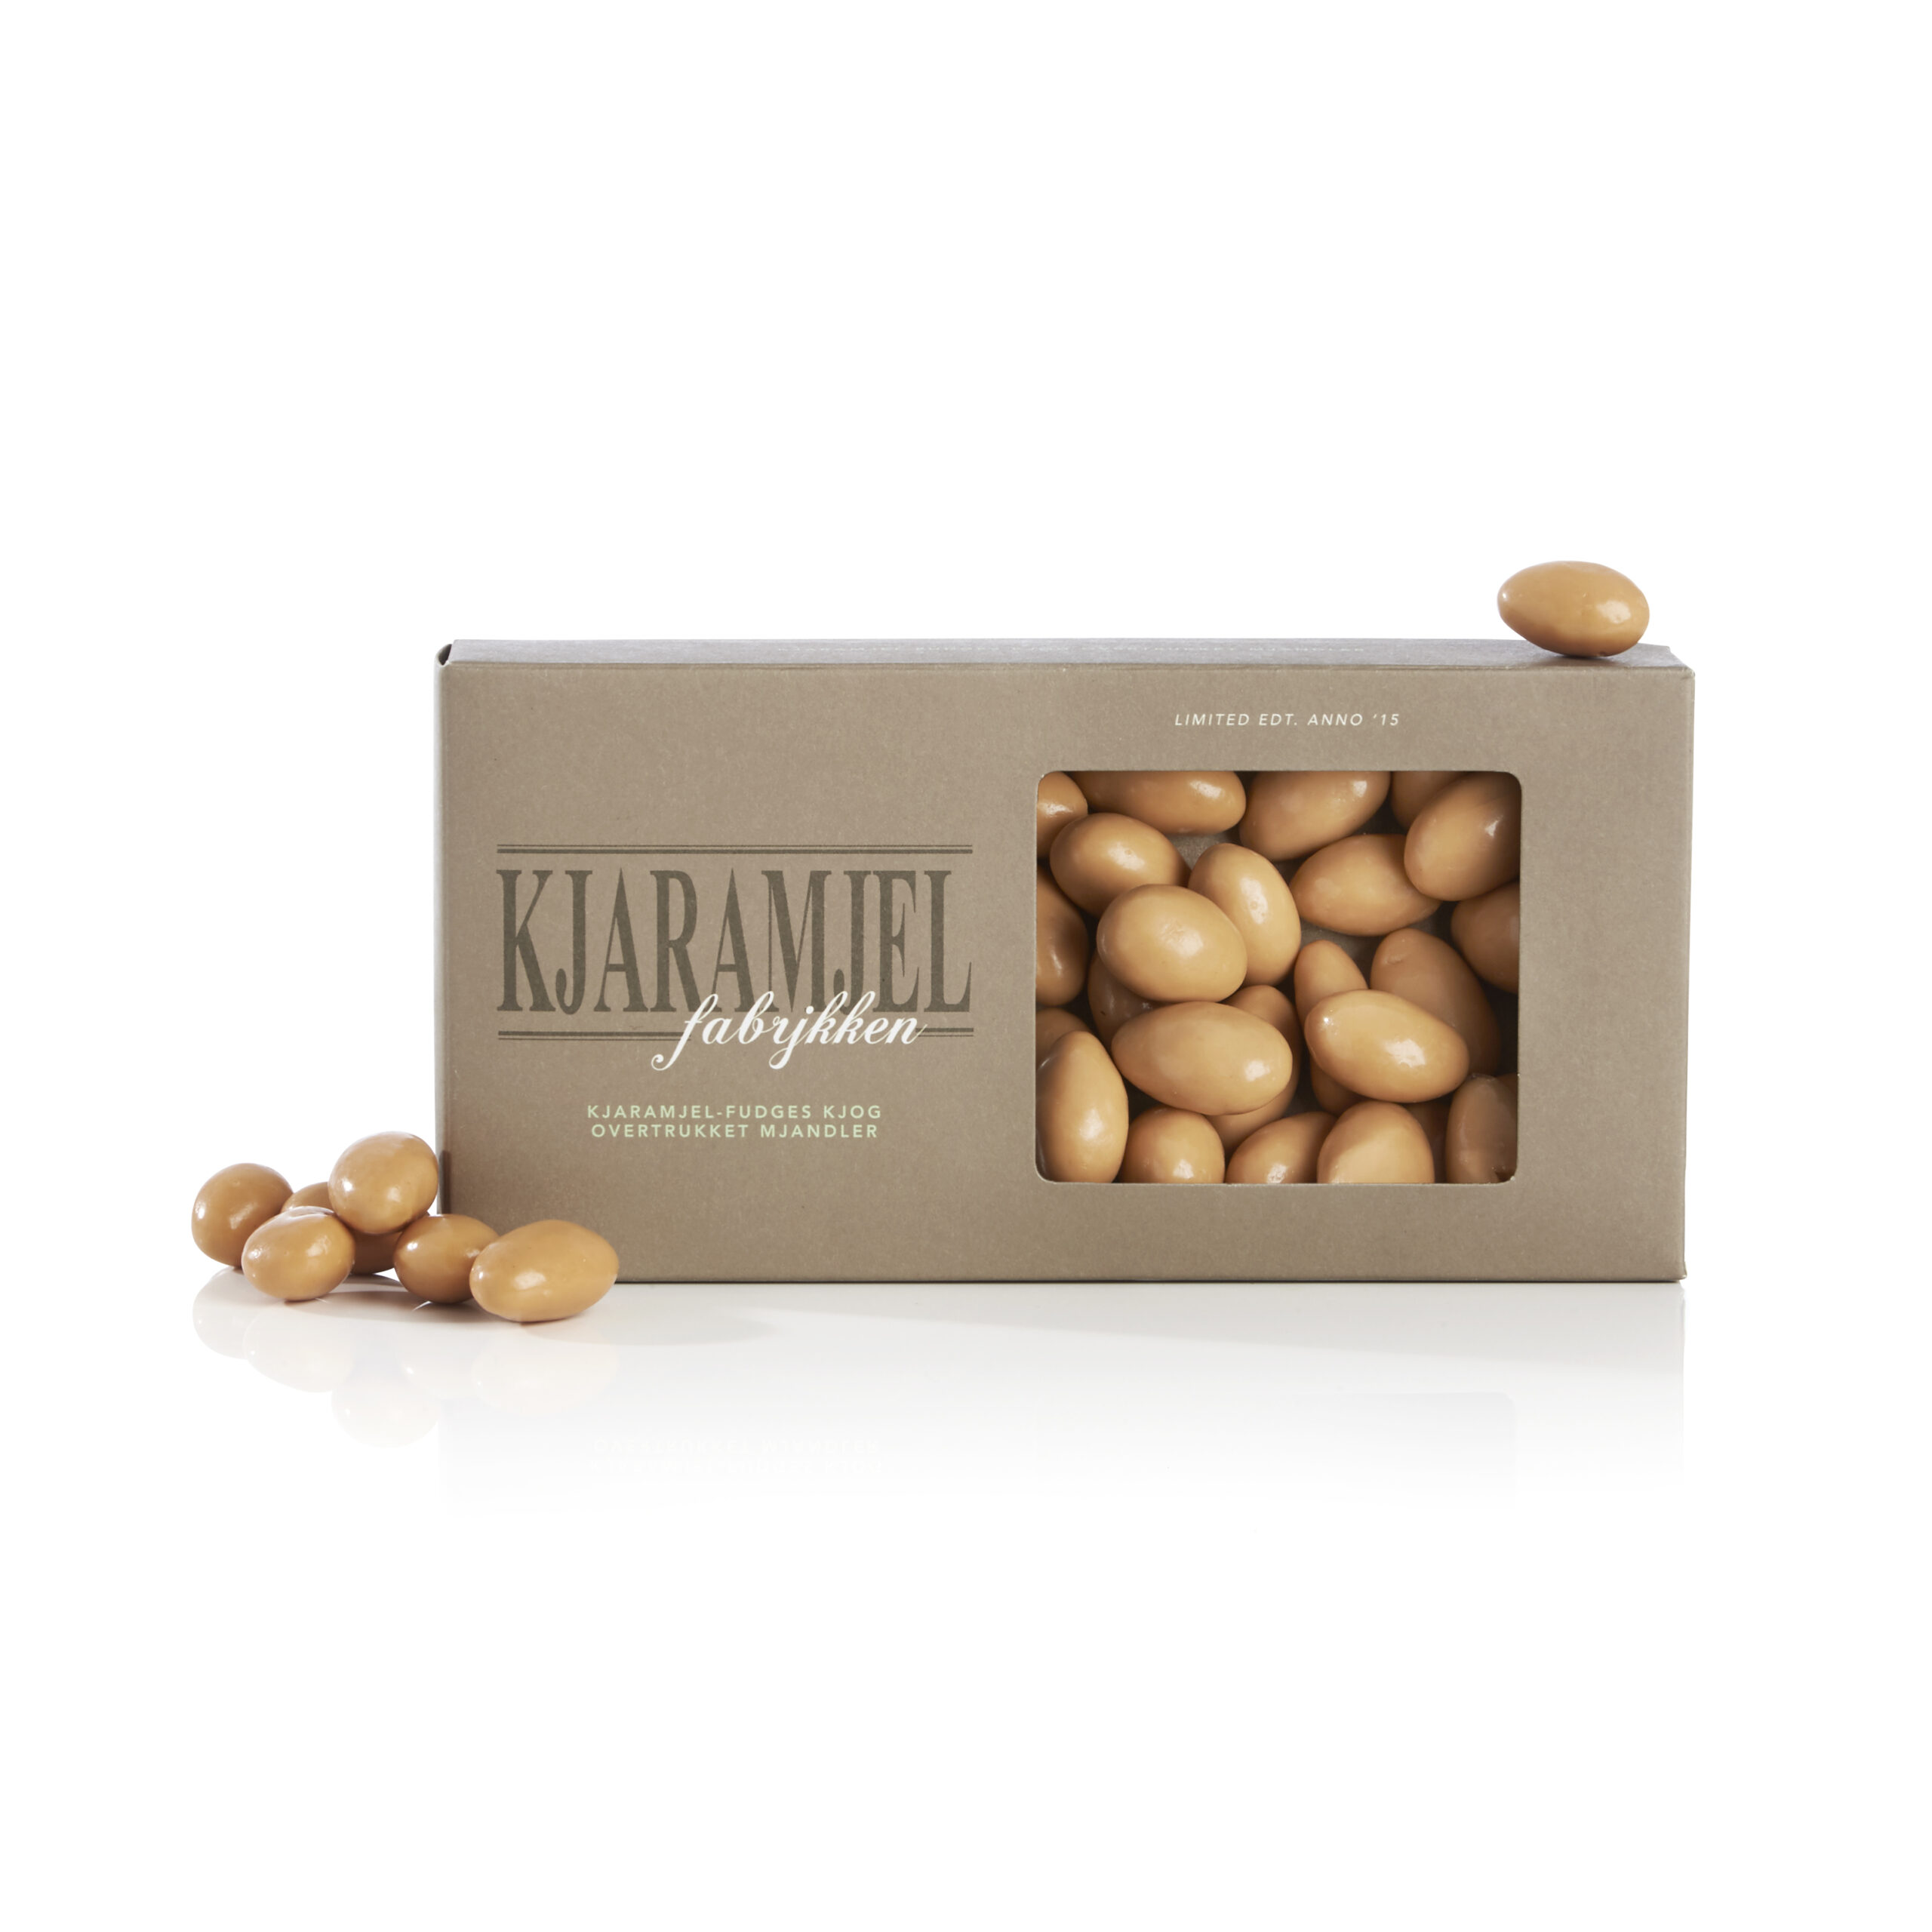 Se Kjaramjel-fudge mandler - Mandler m/ karamel fudge hos Cocoture.dk